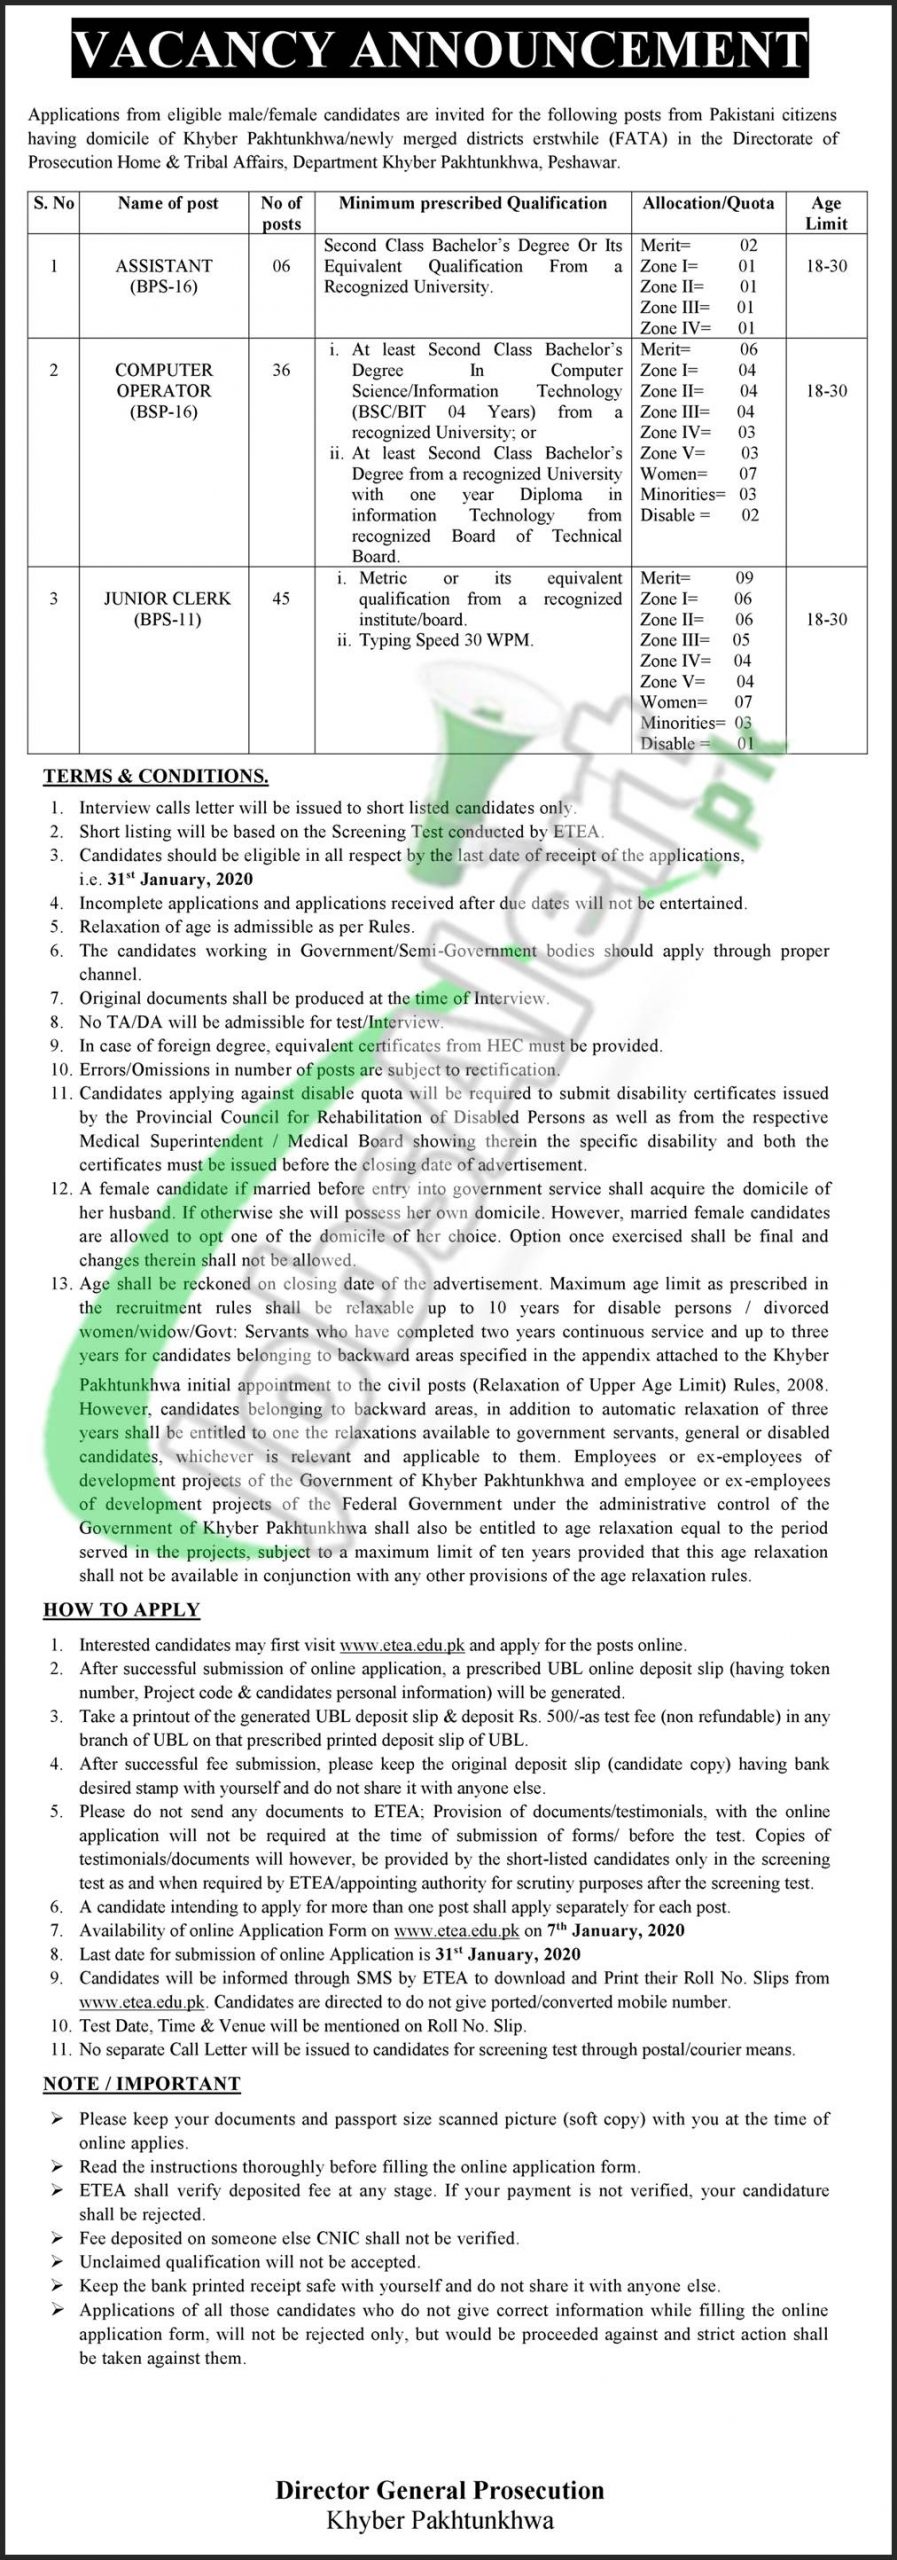 Vacancy Announcement Home & Tribal Affairs Department KPK Peshawar